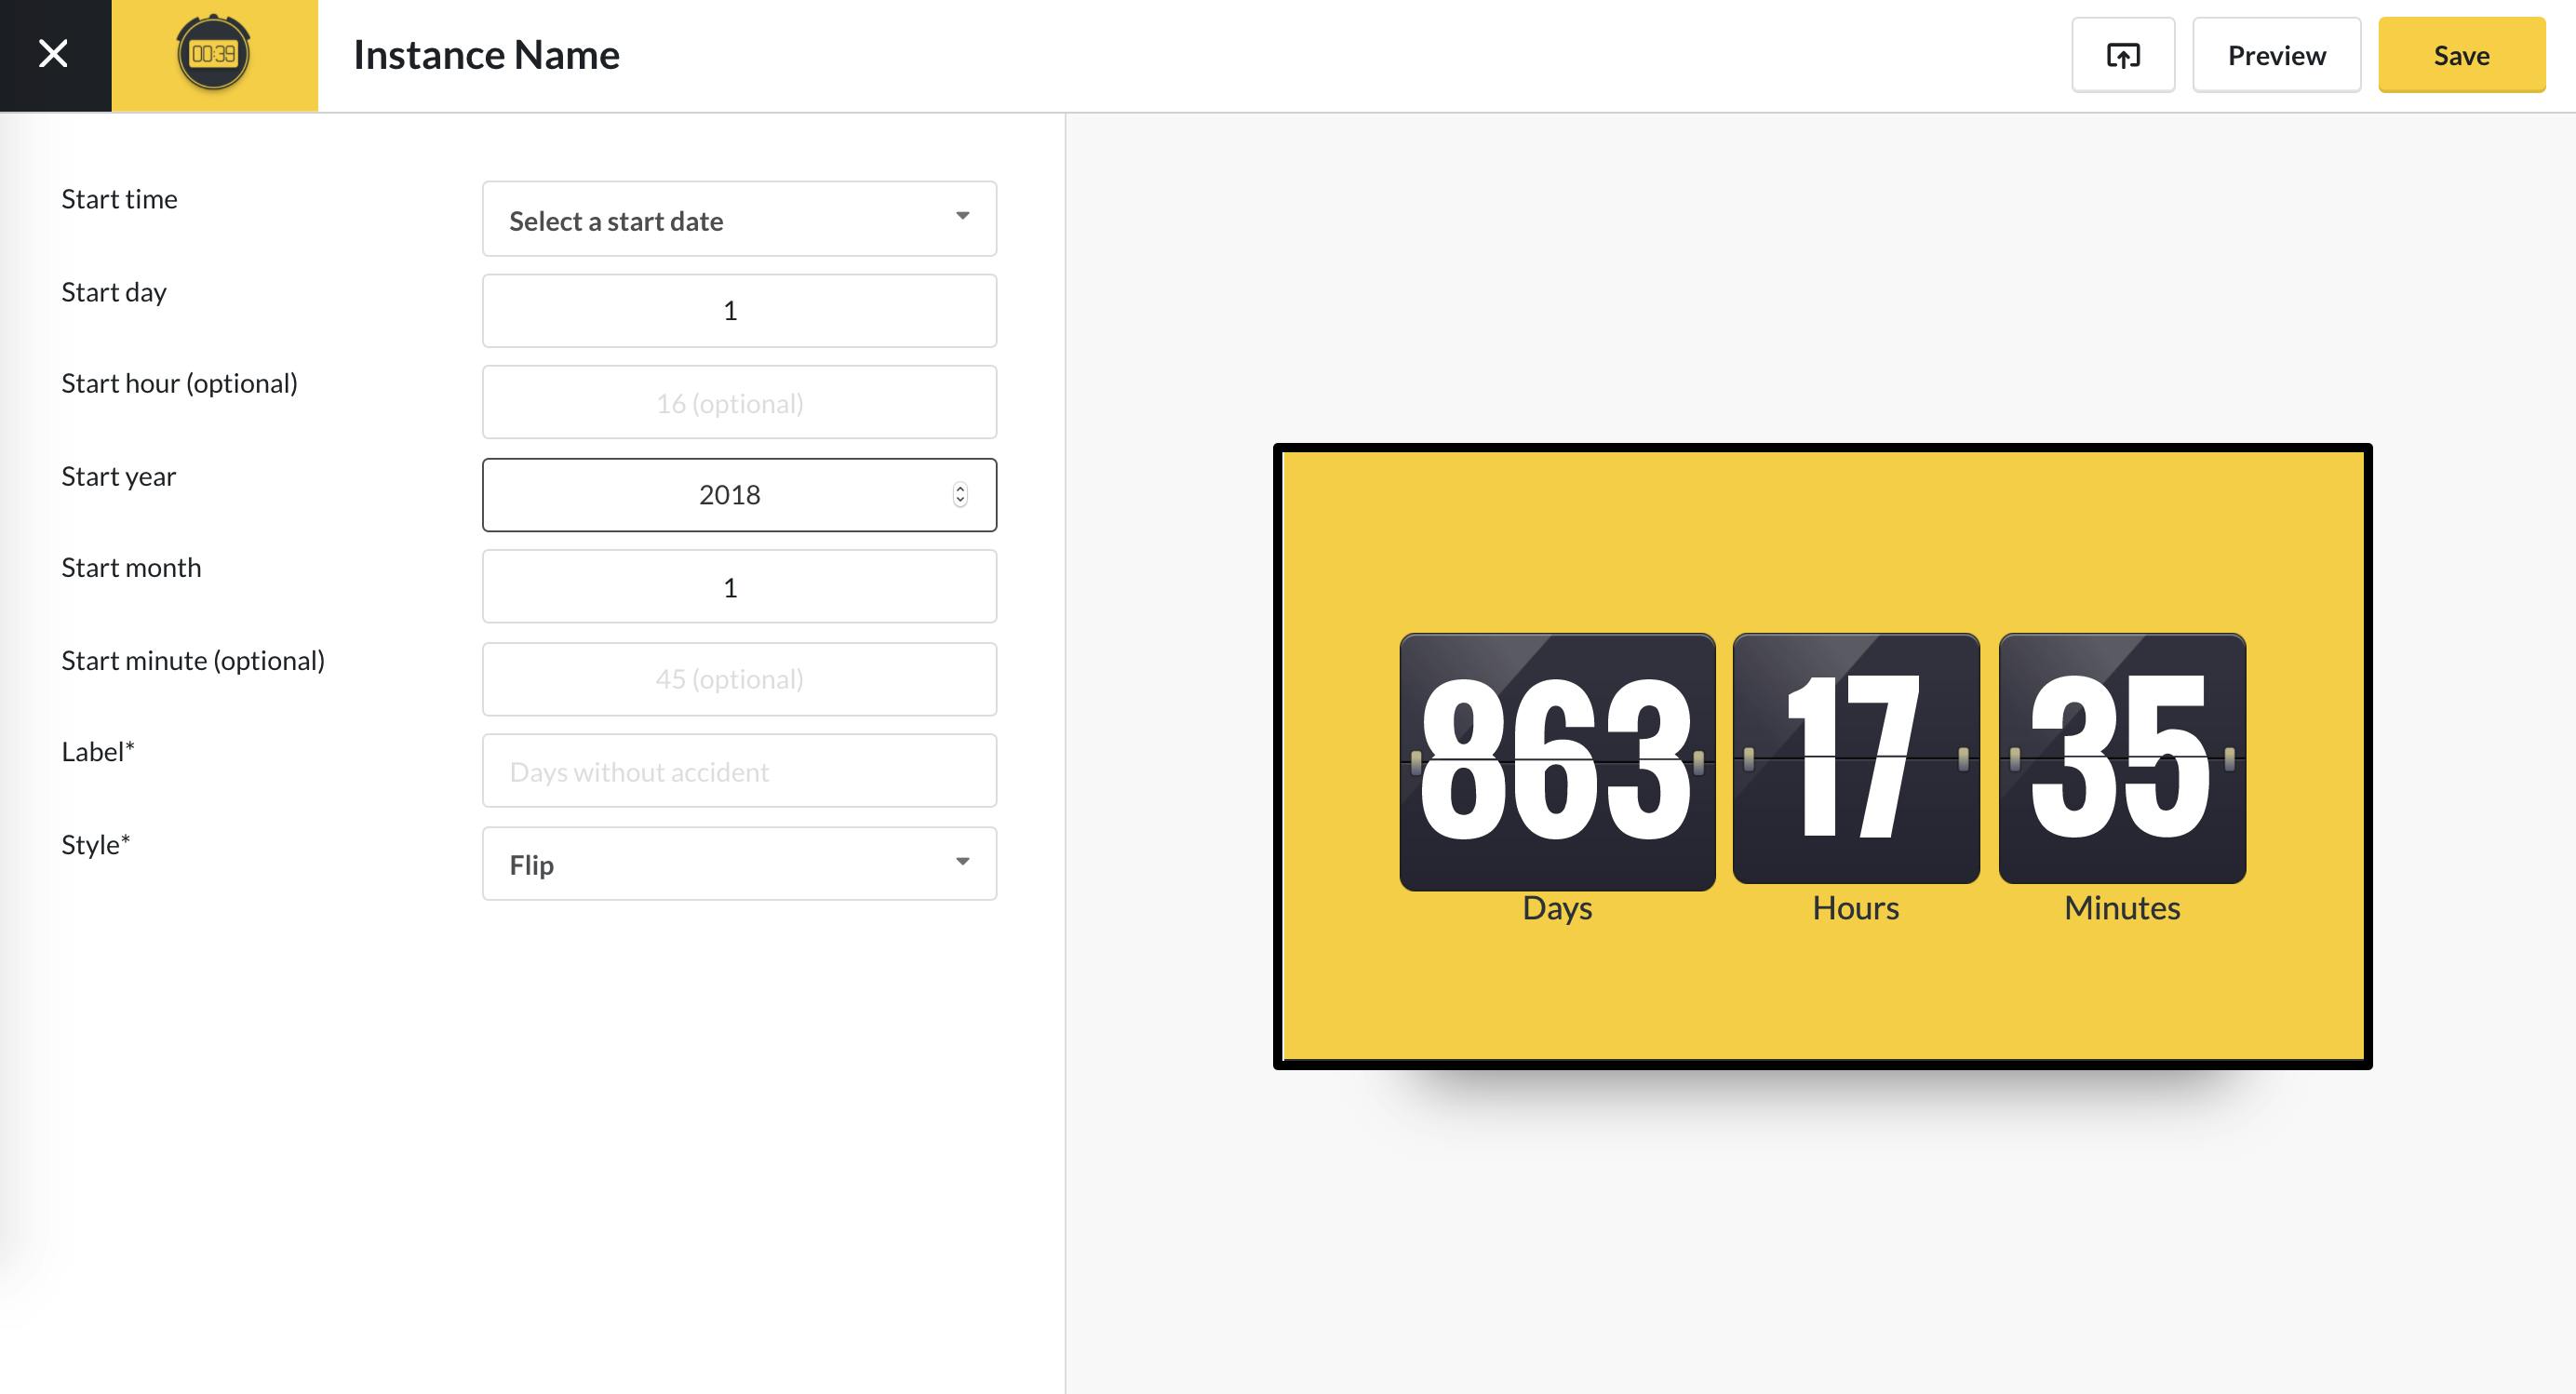 Count Down Timer - Digital Signage App - ScreenCloud